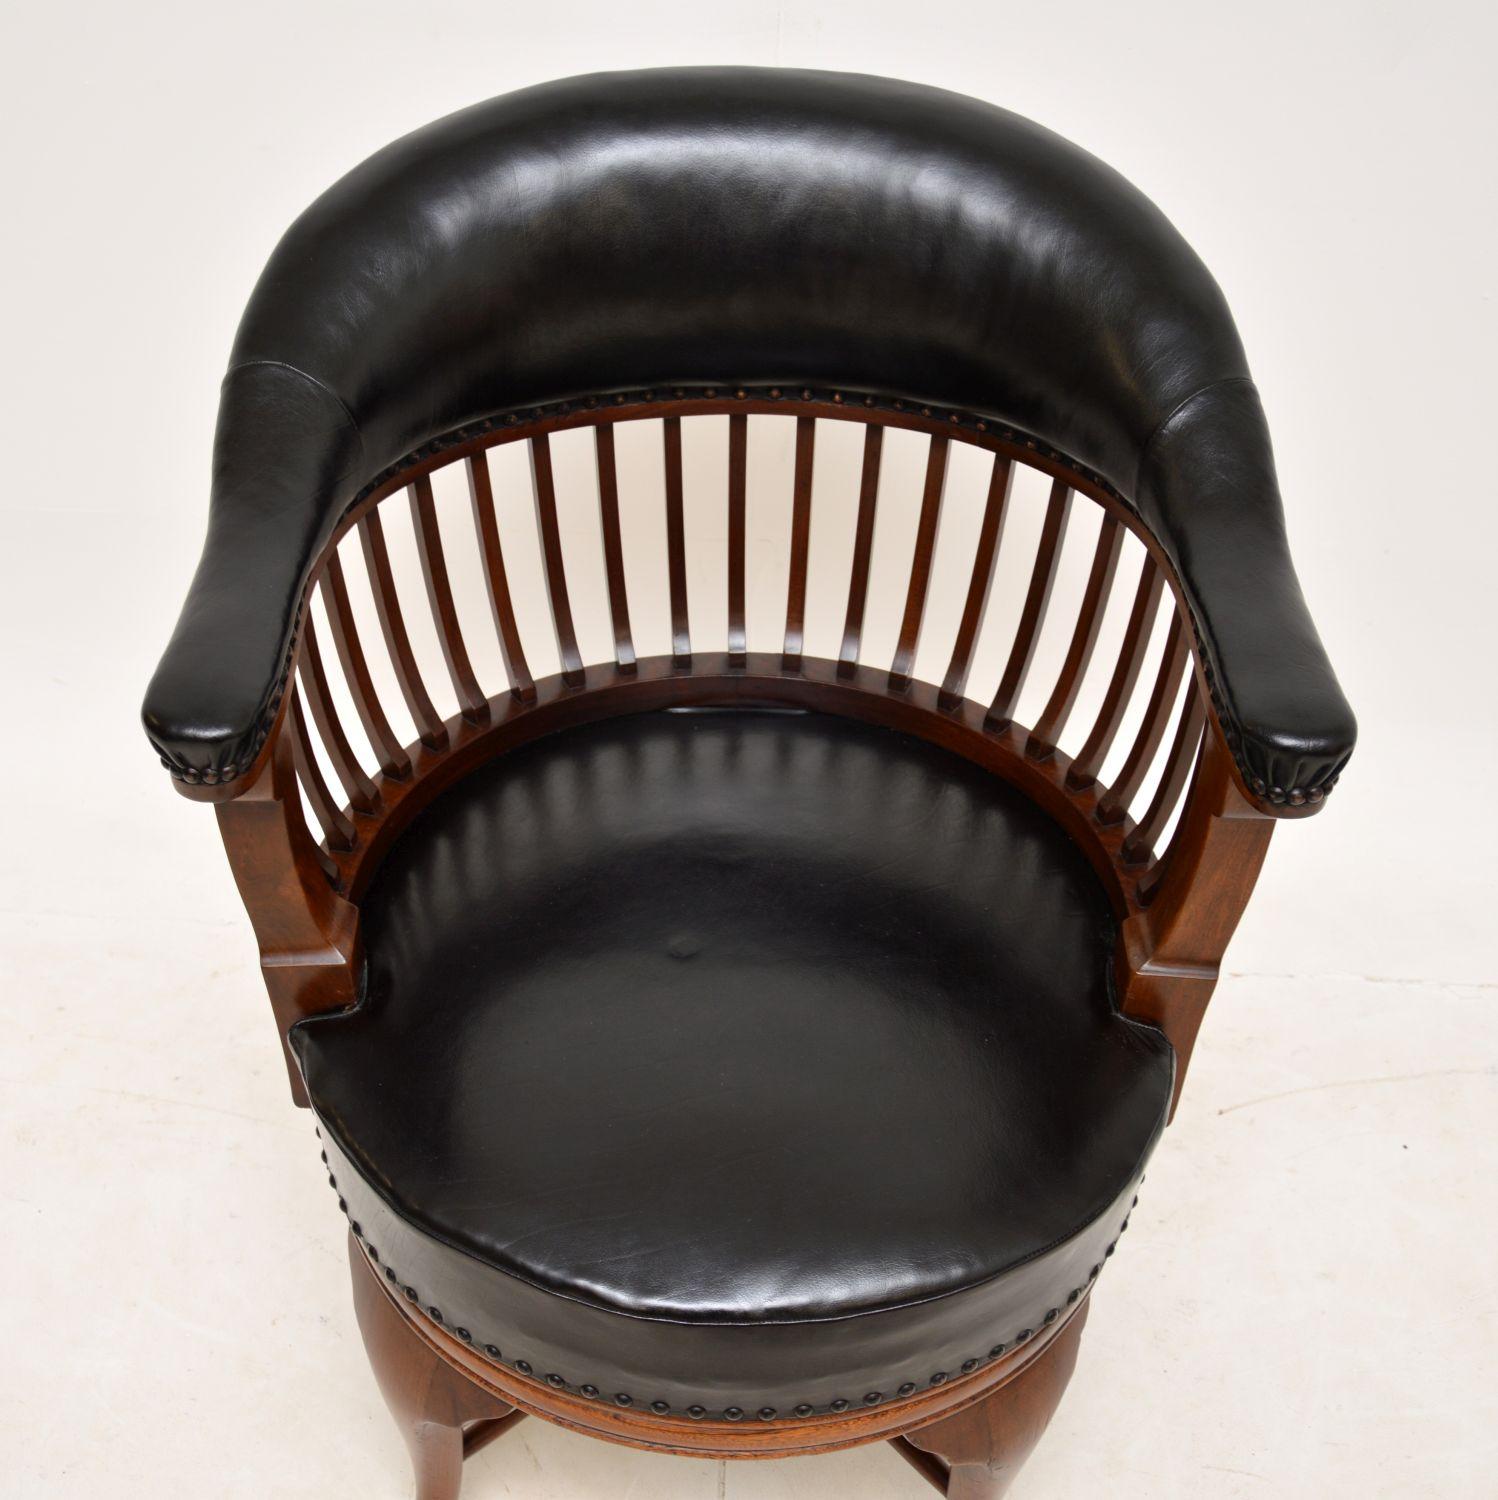 Antique Victorian Swivel Desk Chair 1